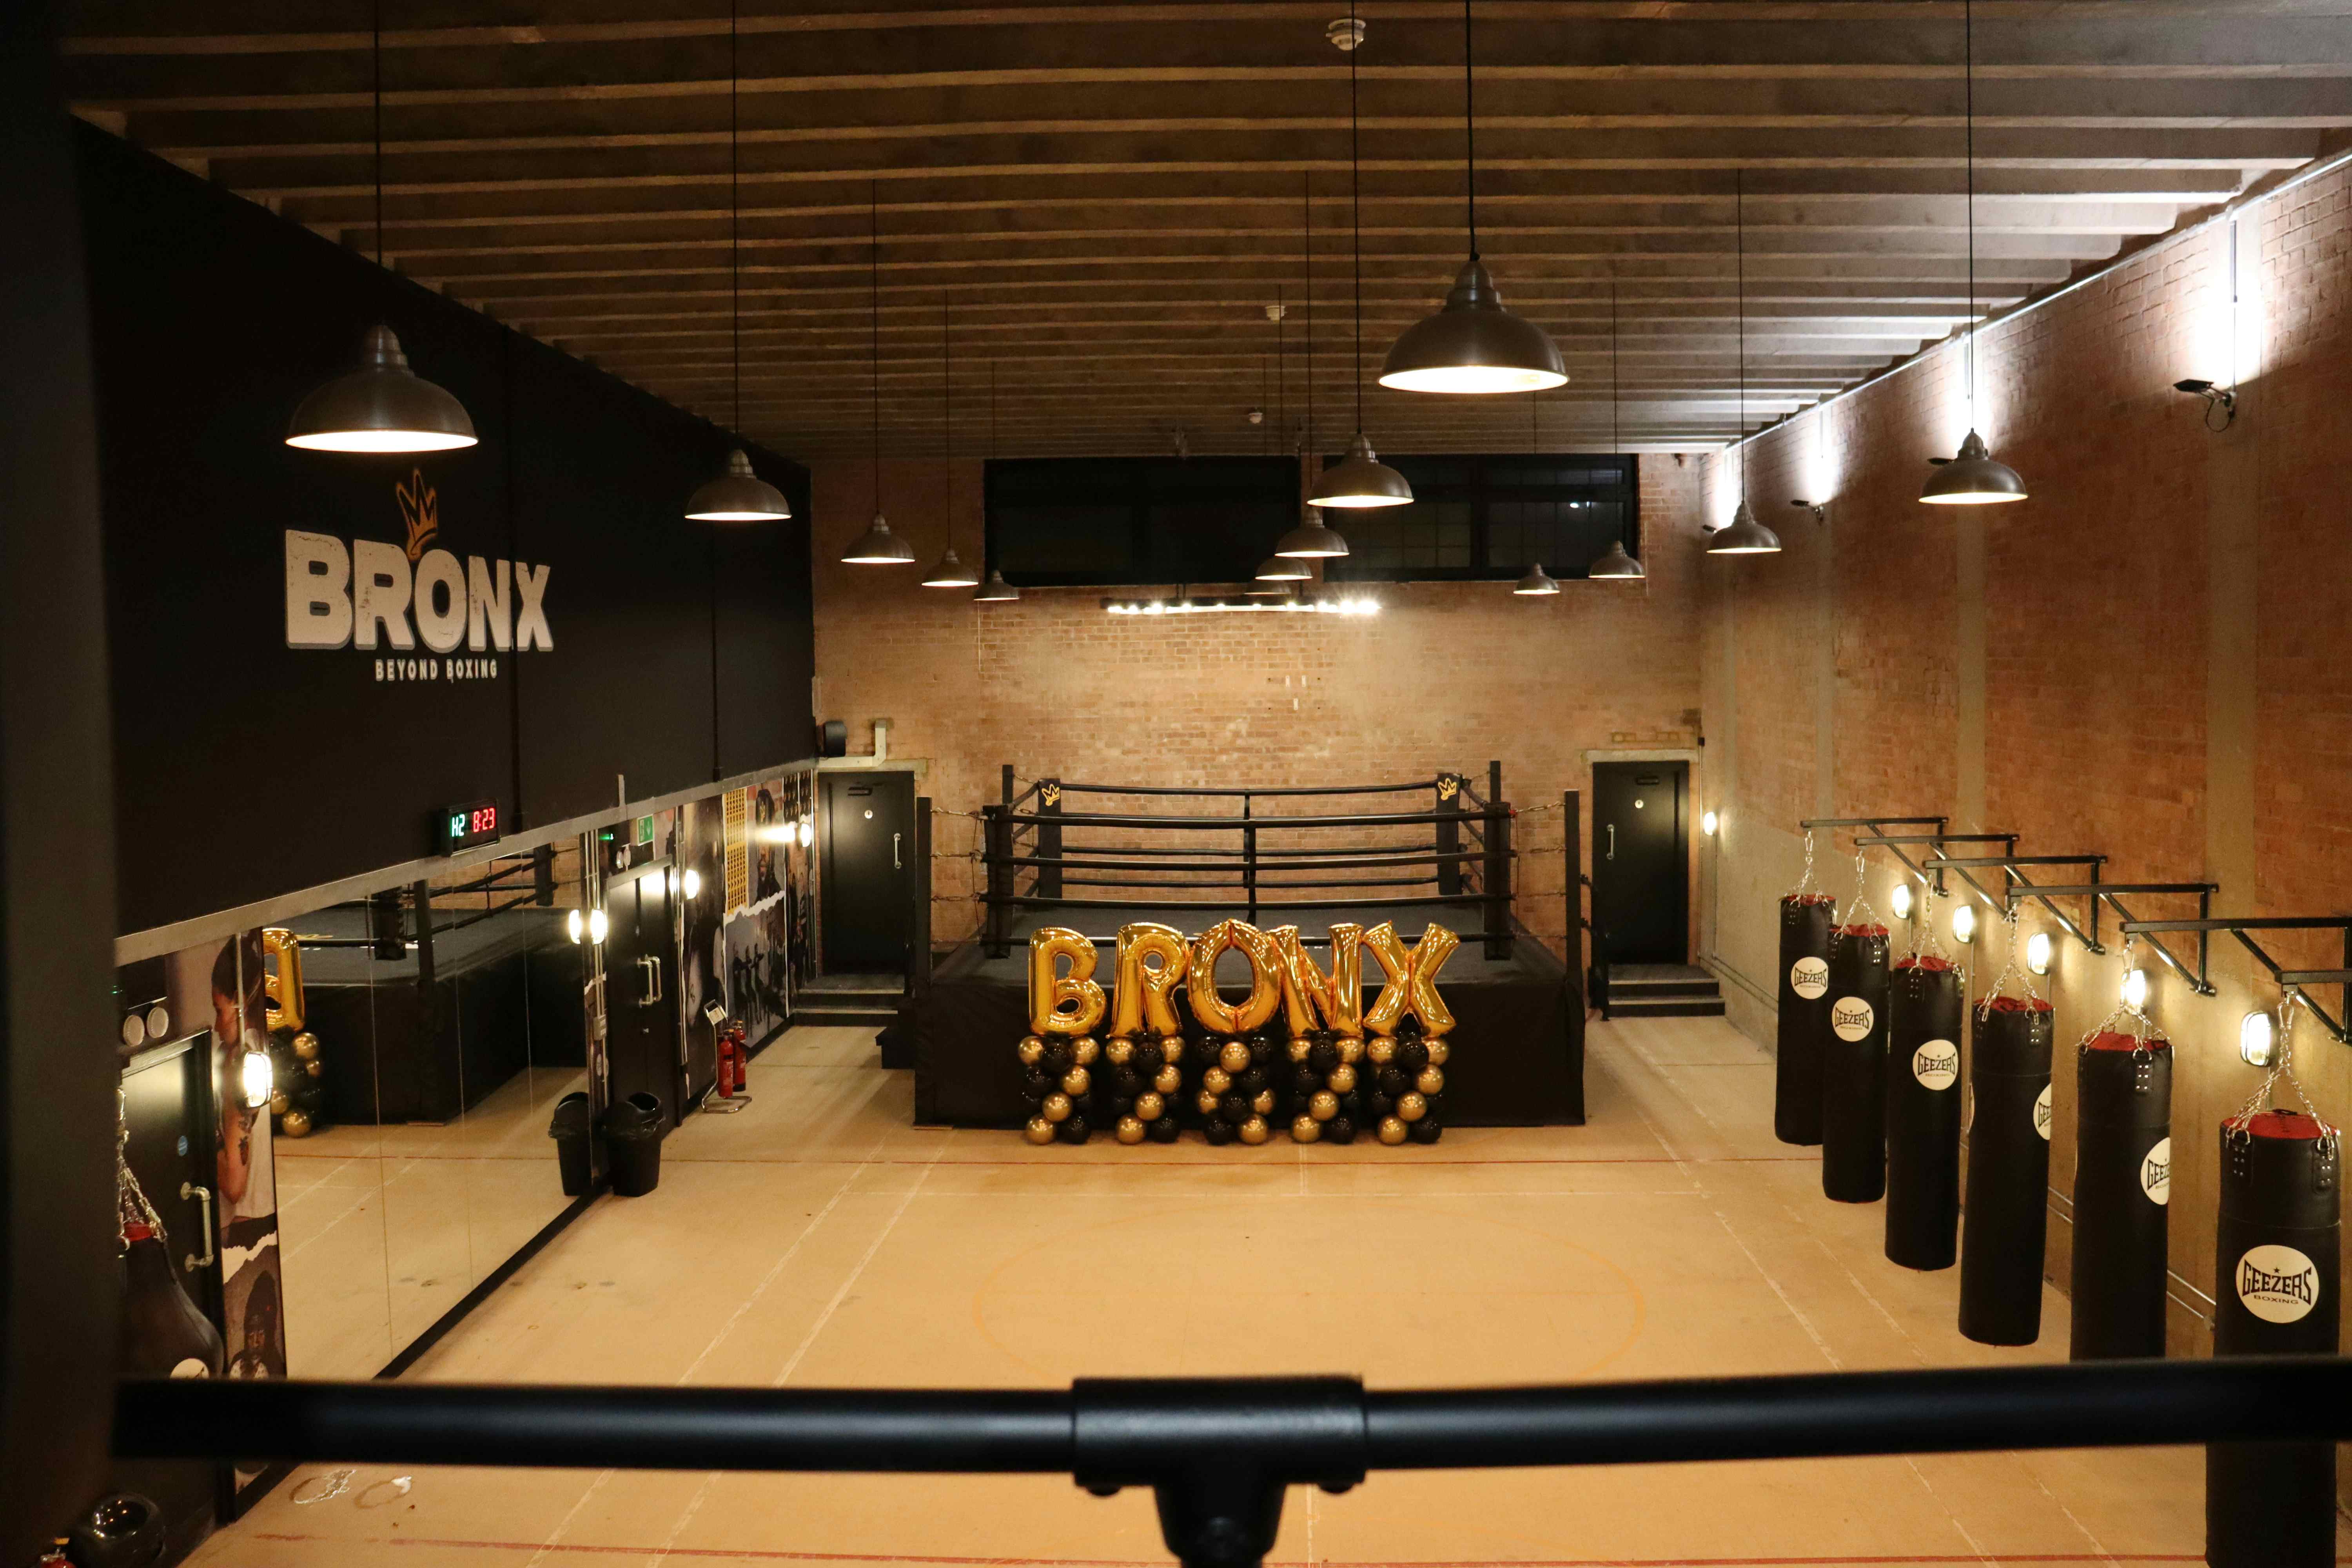 BRONX, Bronx boxing